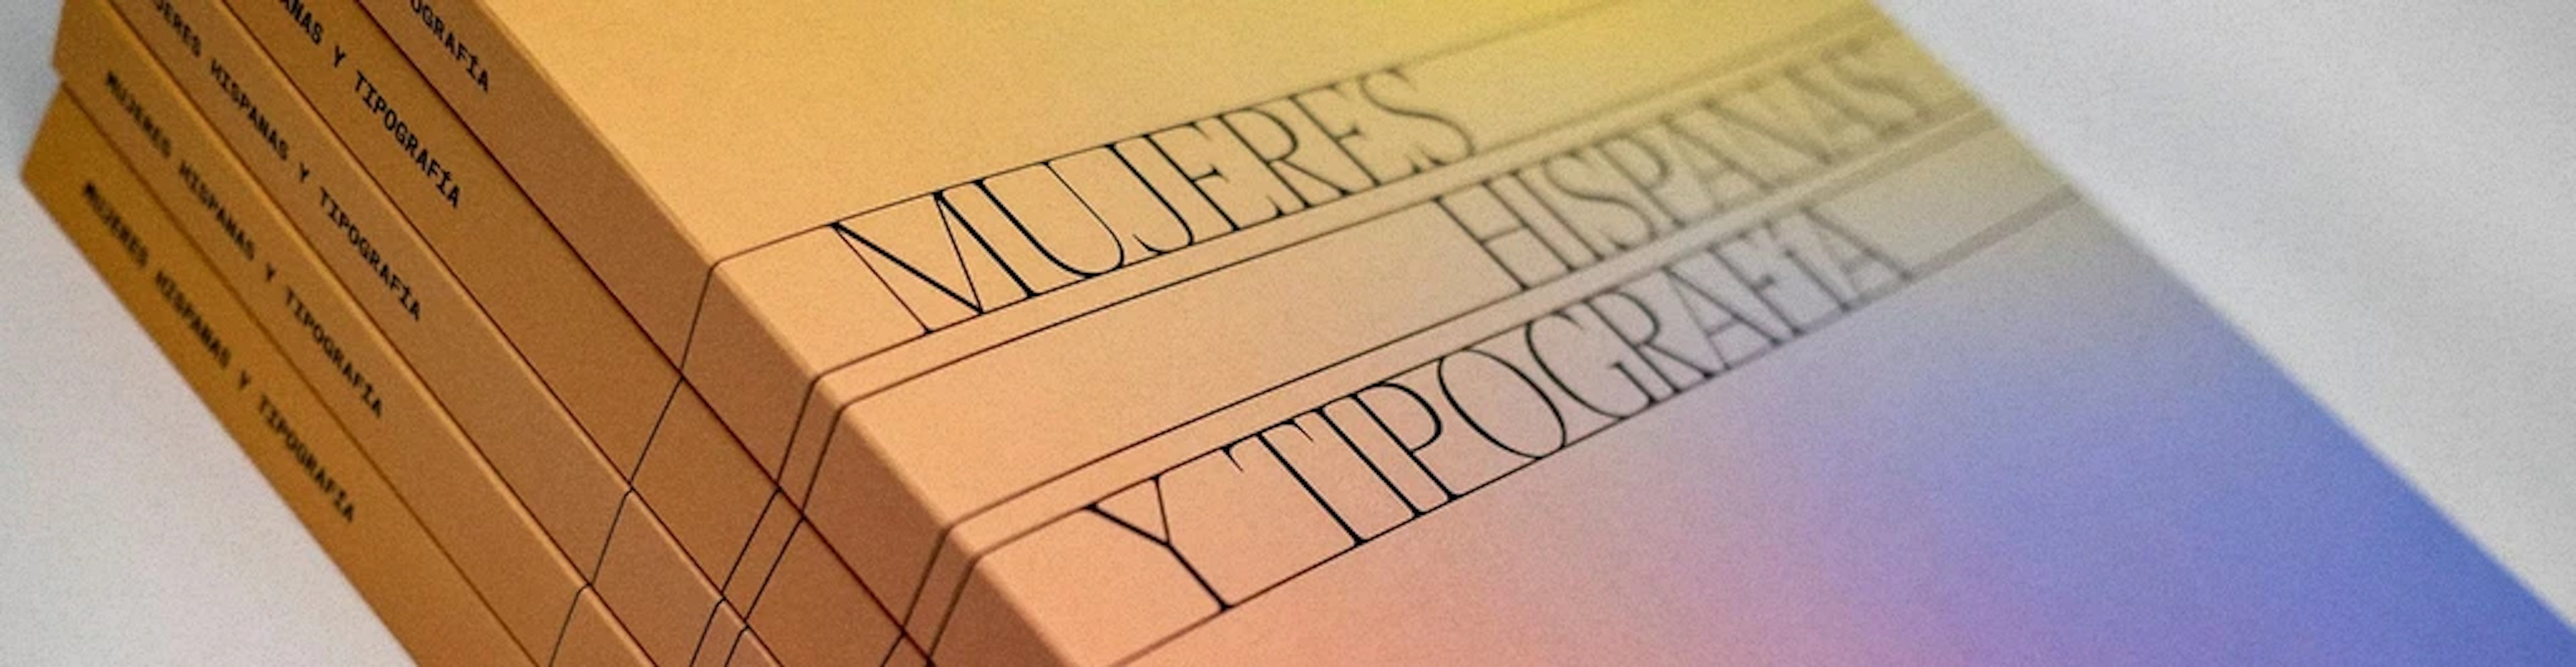 Hispanic Women And Their Typographic Legacy